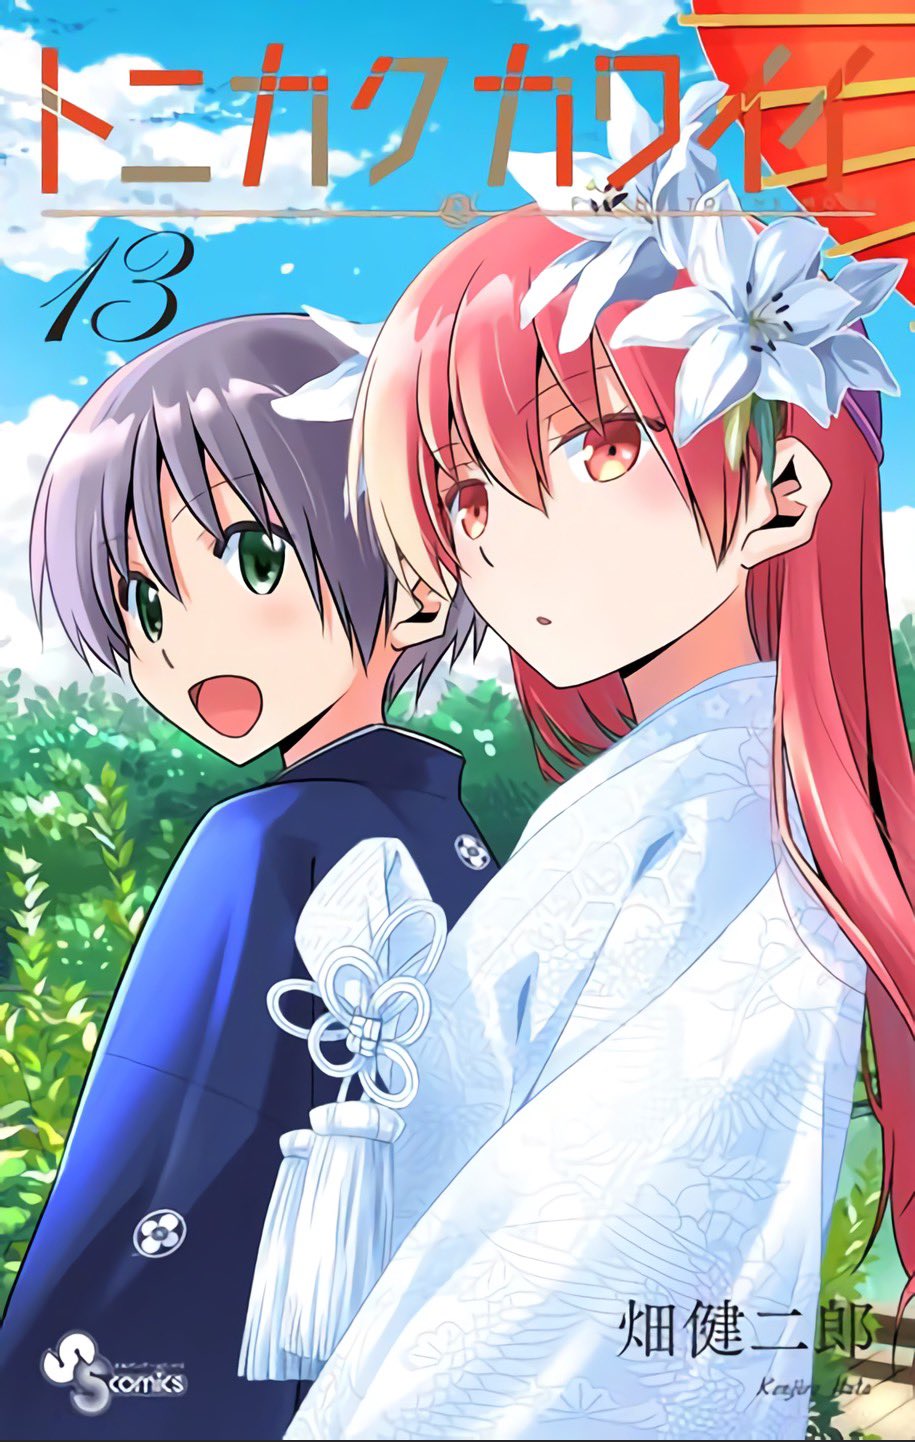 El manga Tonikaku Kawaii supera 2 millones de copias en circulaci 243 n 